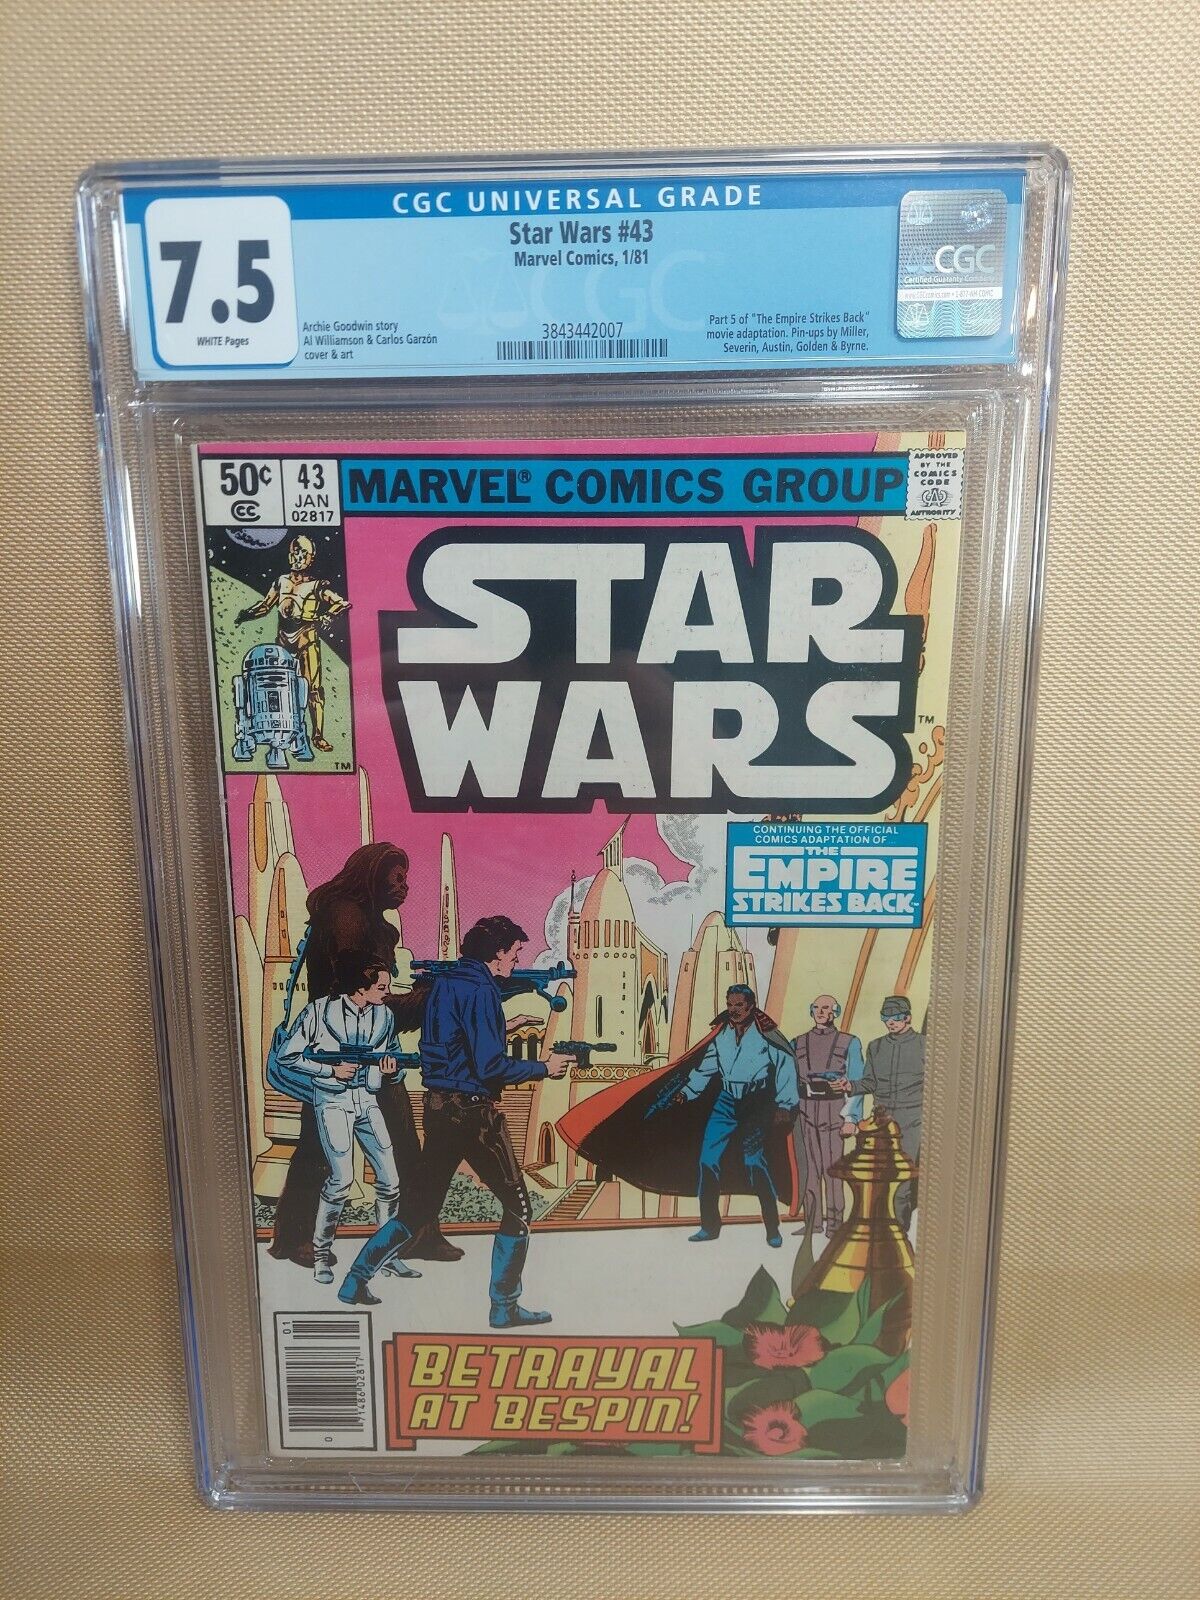 Star Wars #43 CGC Graded 7.5 Marvel January 1981 Newsstand Edition Comic Book.